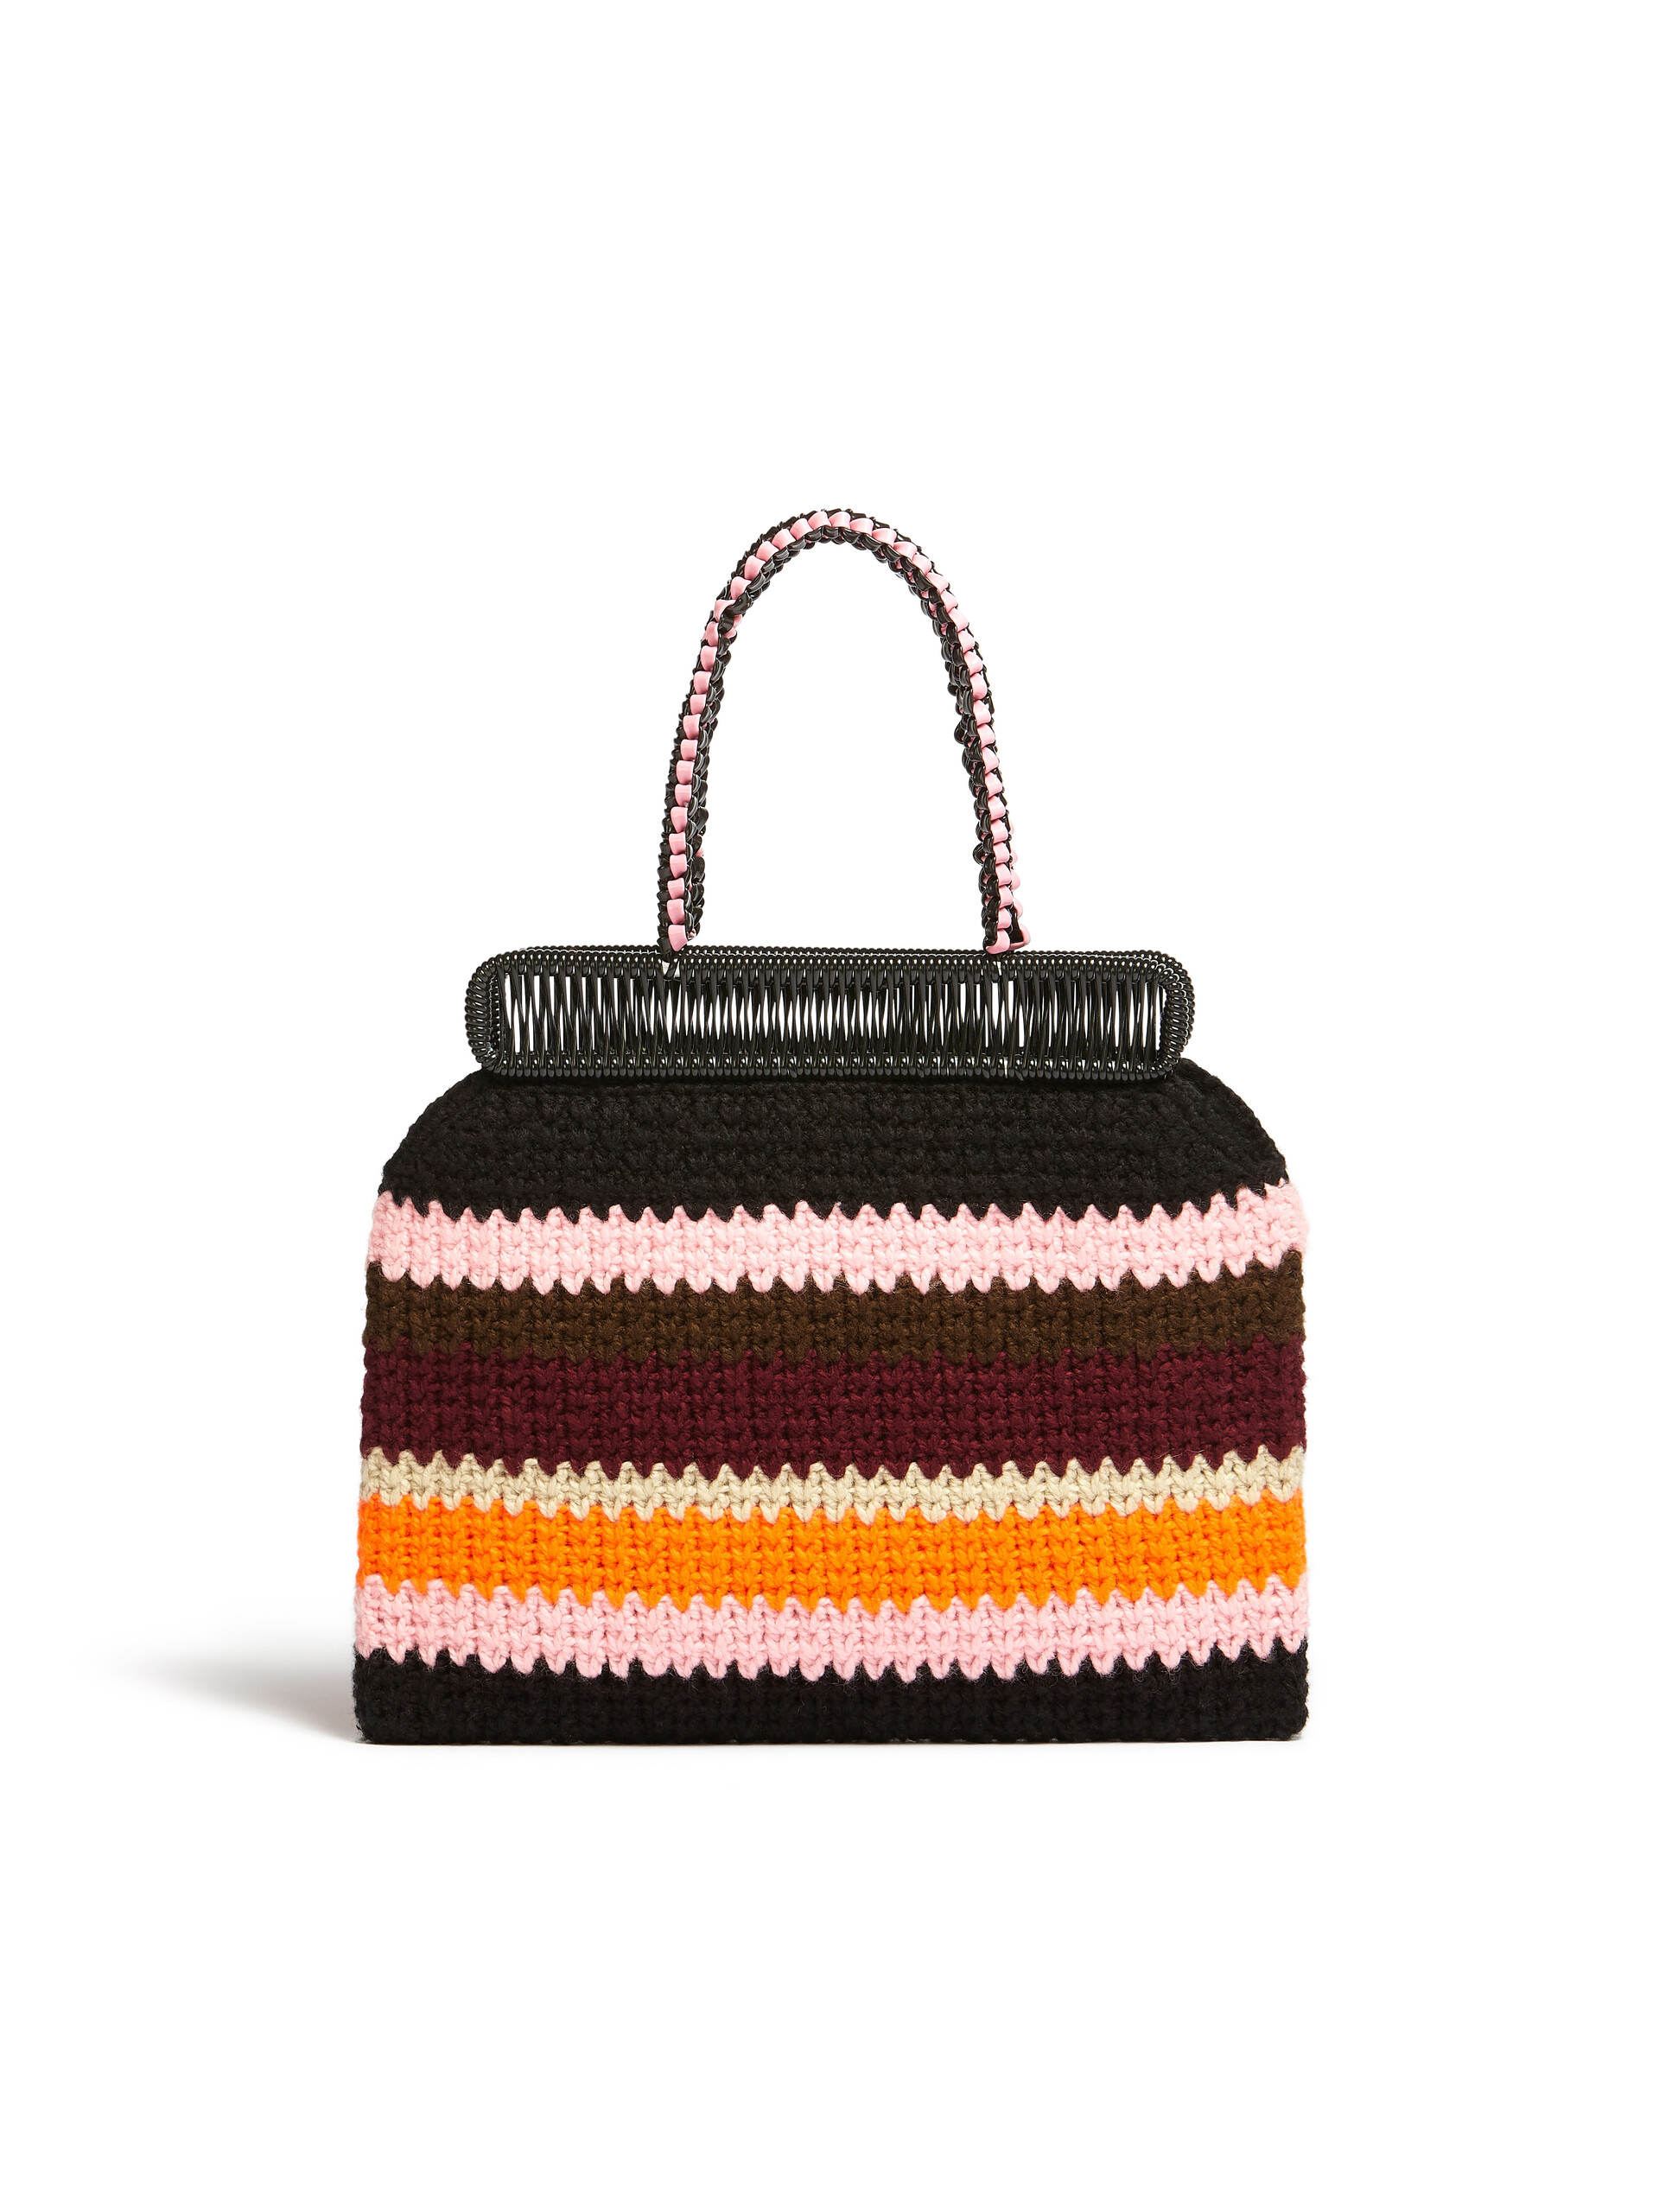 MARNI MARKET bag in multicolour pink crochet wool - Furniture - Image 3